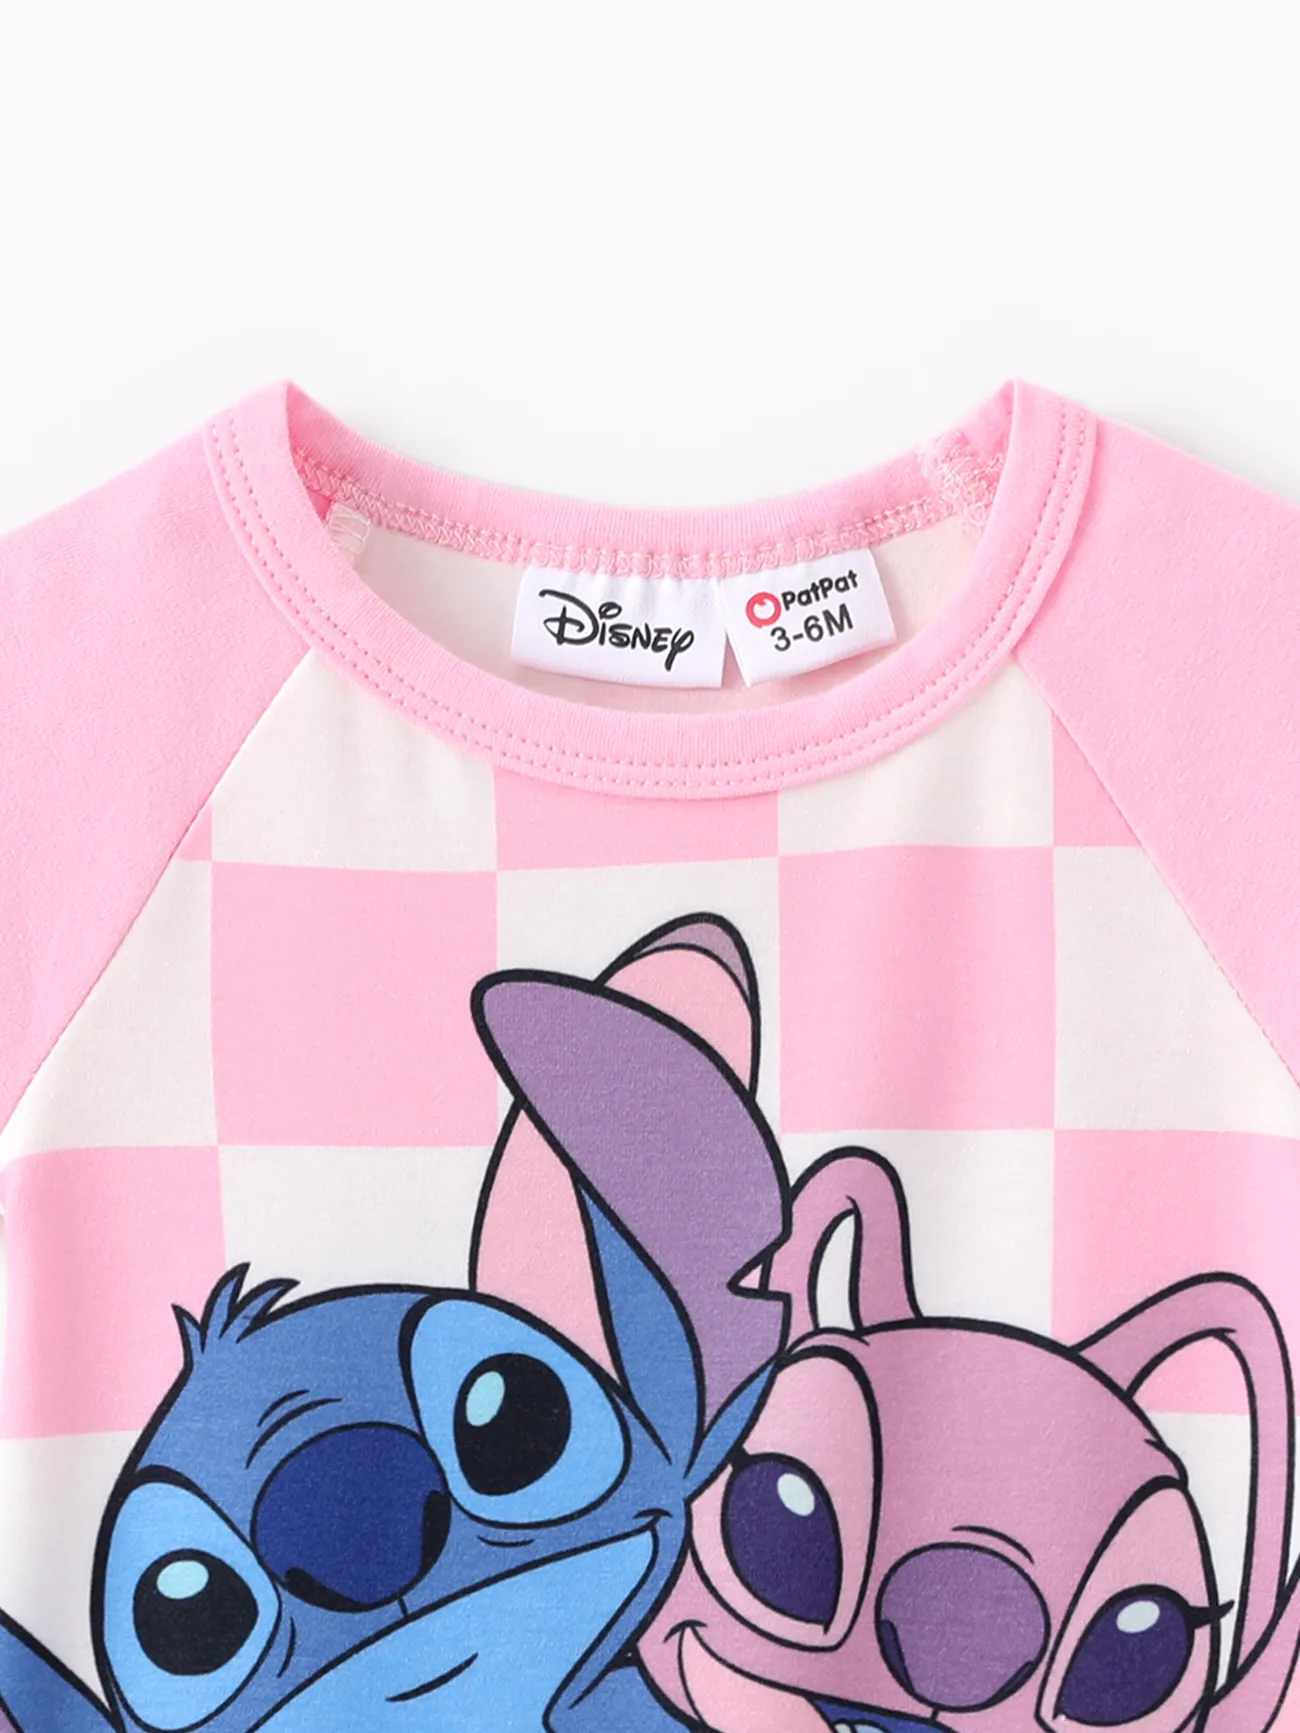 Disney Stitch Baby Boys/Girls 1pc Naia™ Character Grid/chessboard Print Romper Pink big image 1